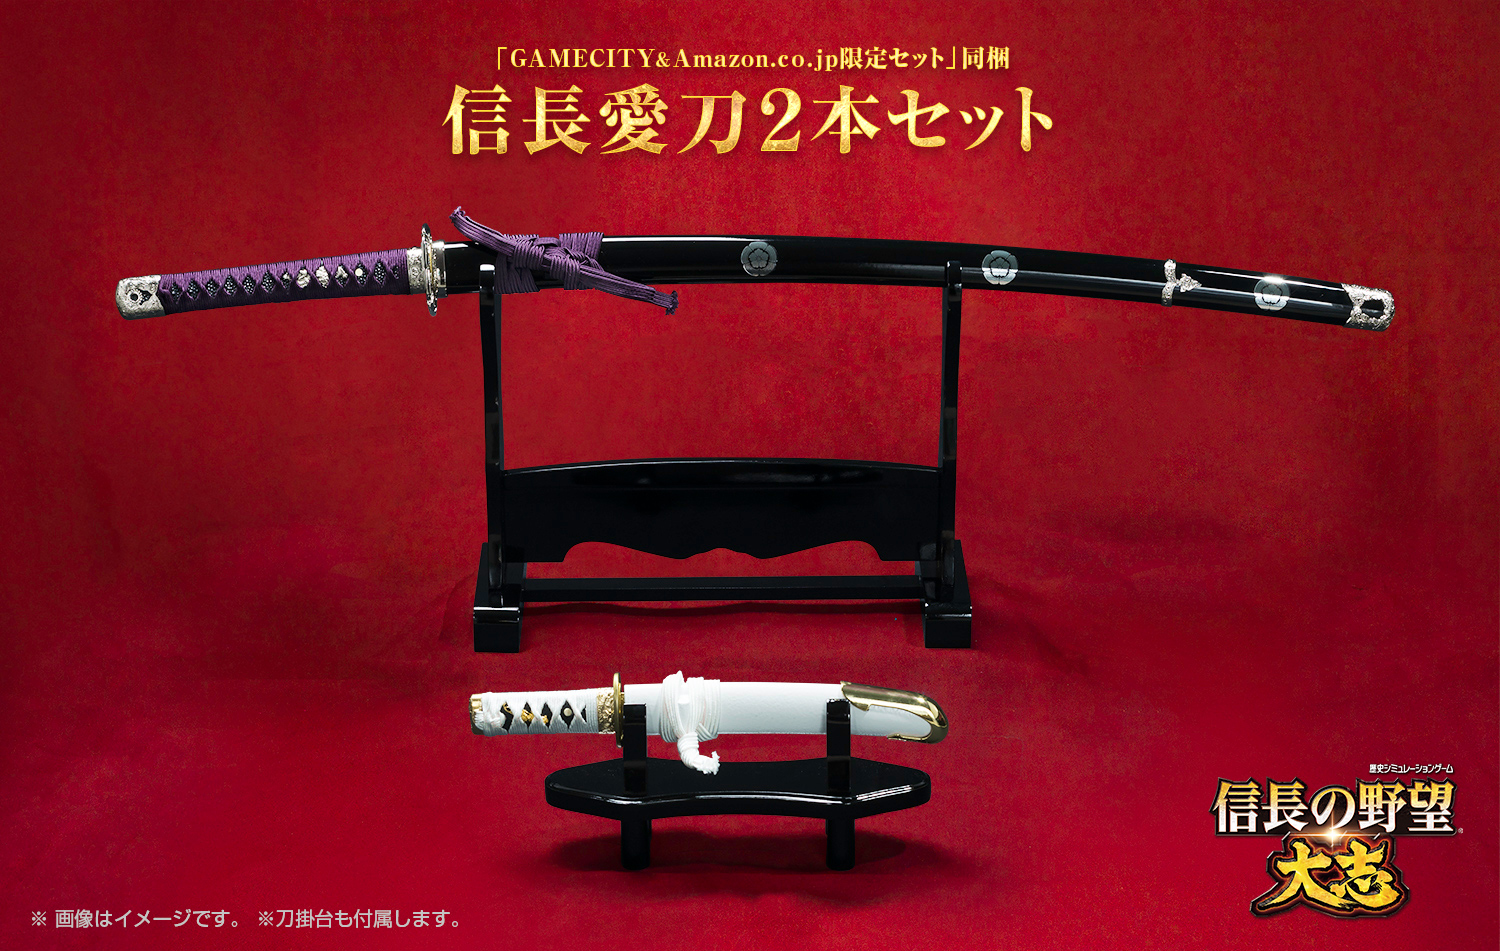 Nobunaga S Ambition Taishi Getting Various Bundles Special Editions Gonintendo